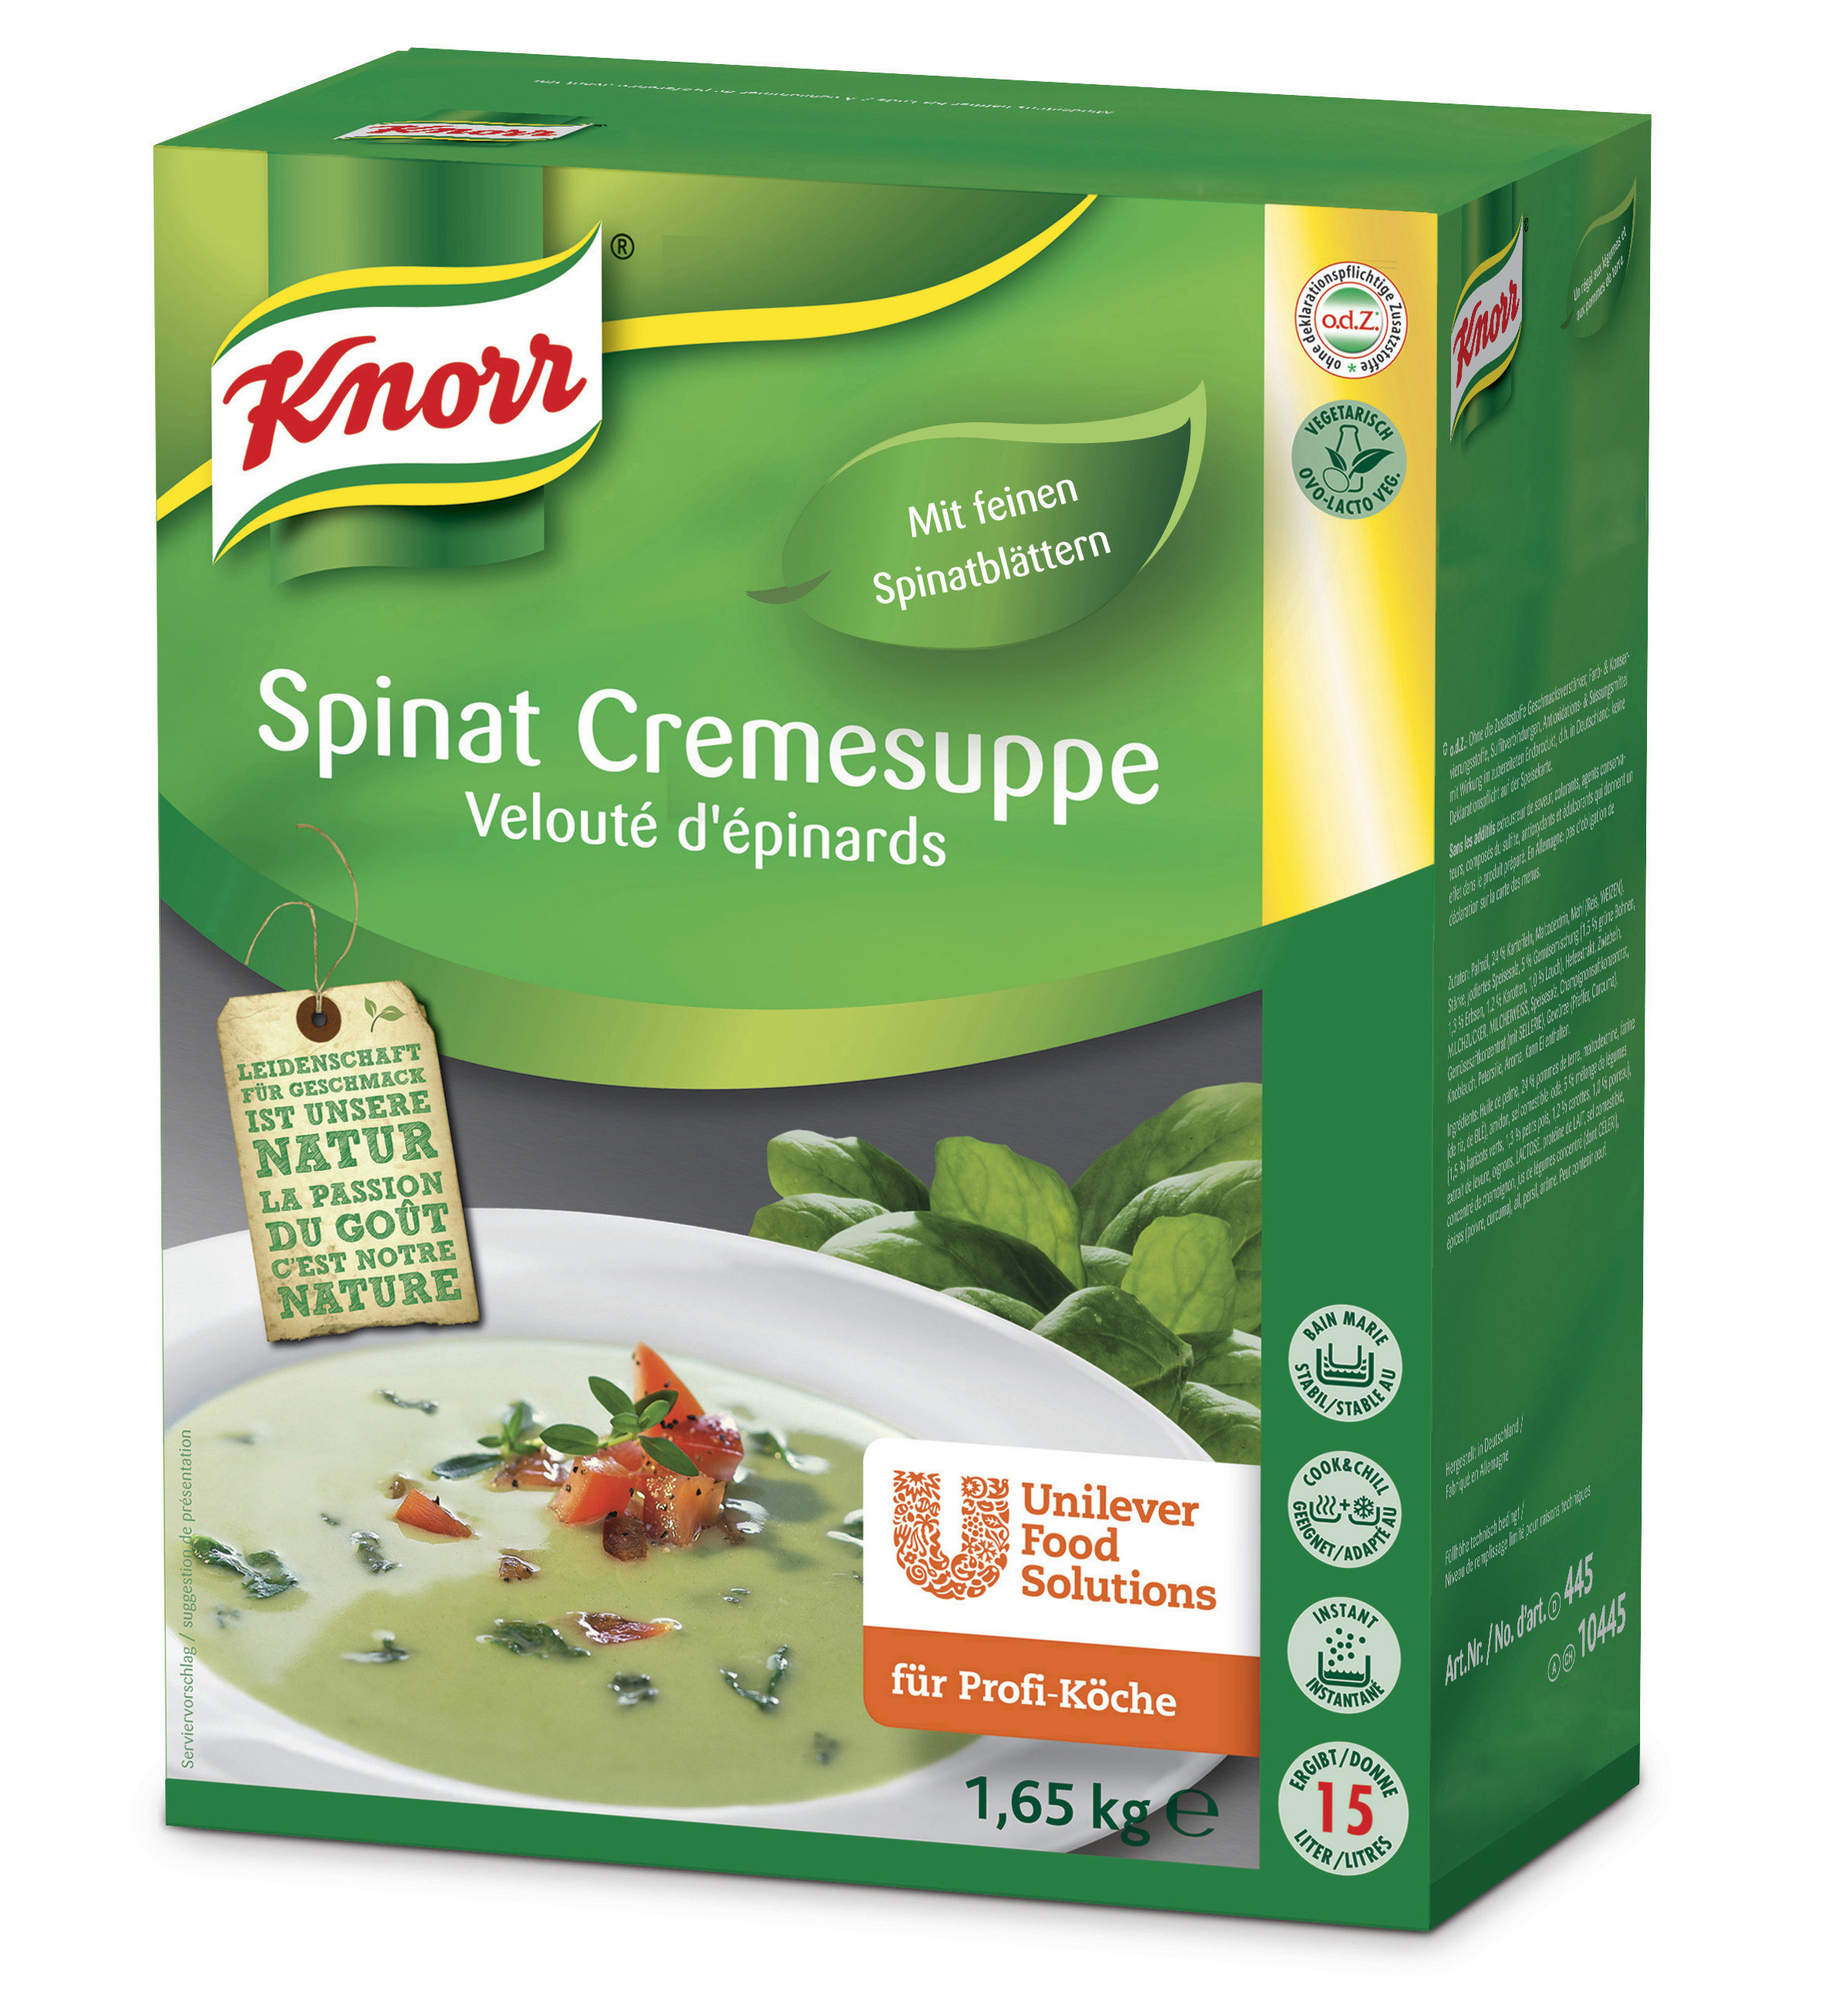 Spinat Cremesuppe 1650g